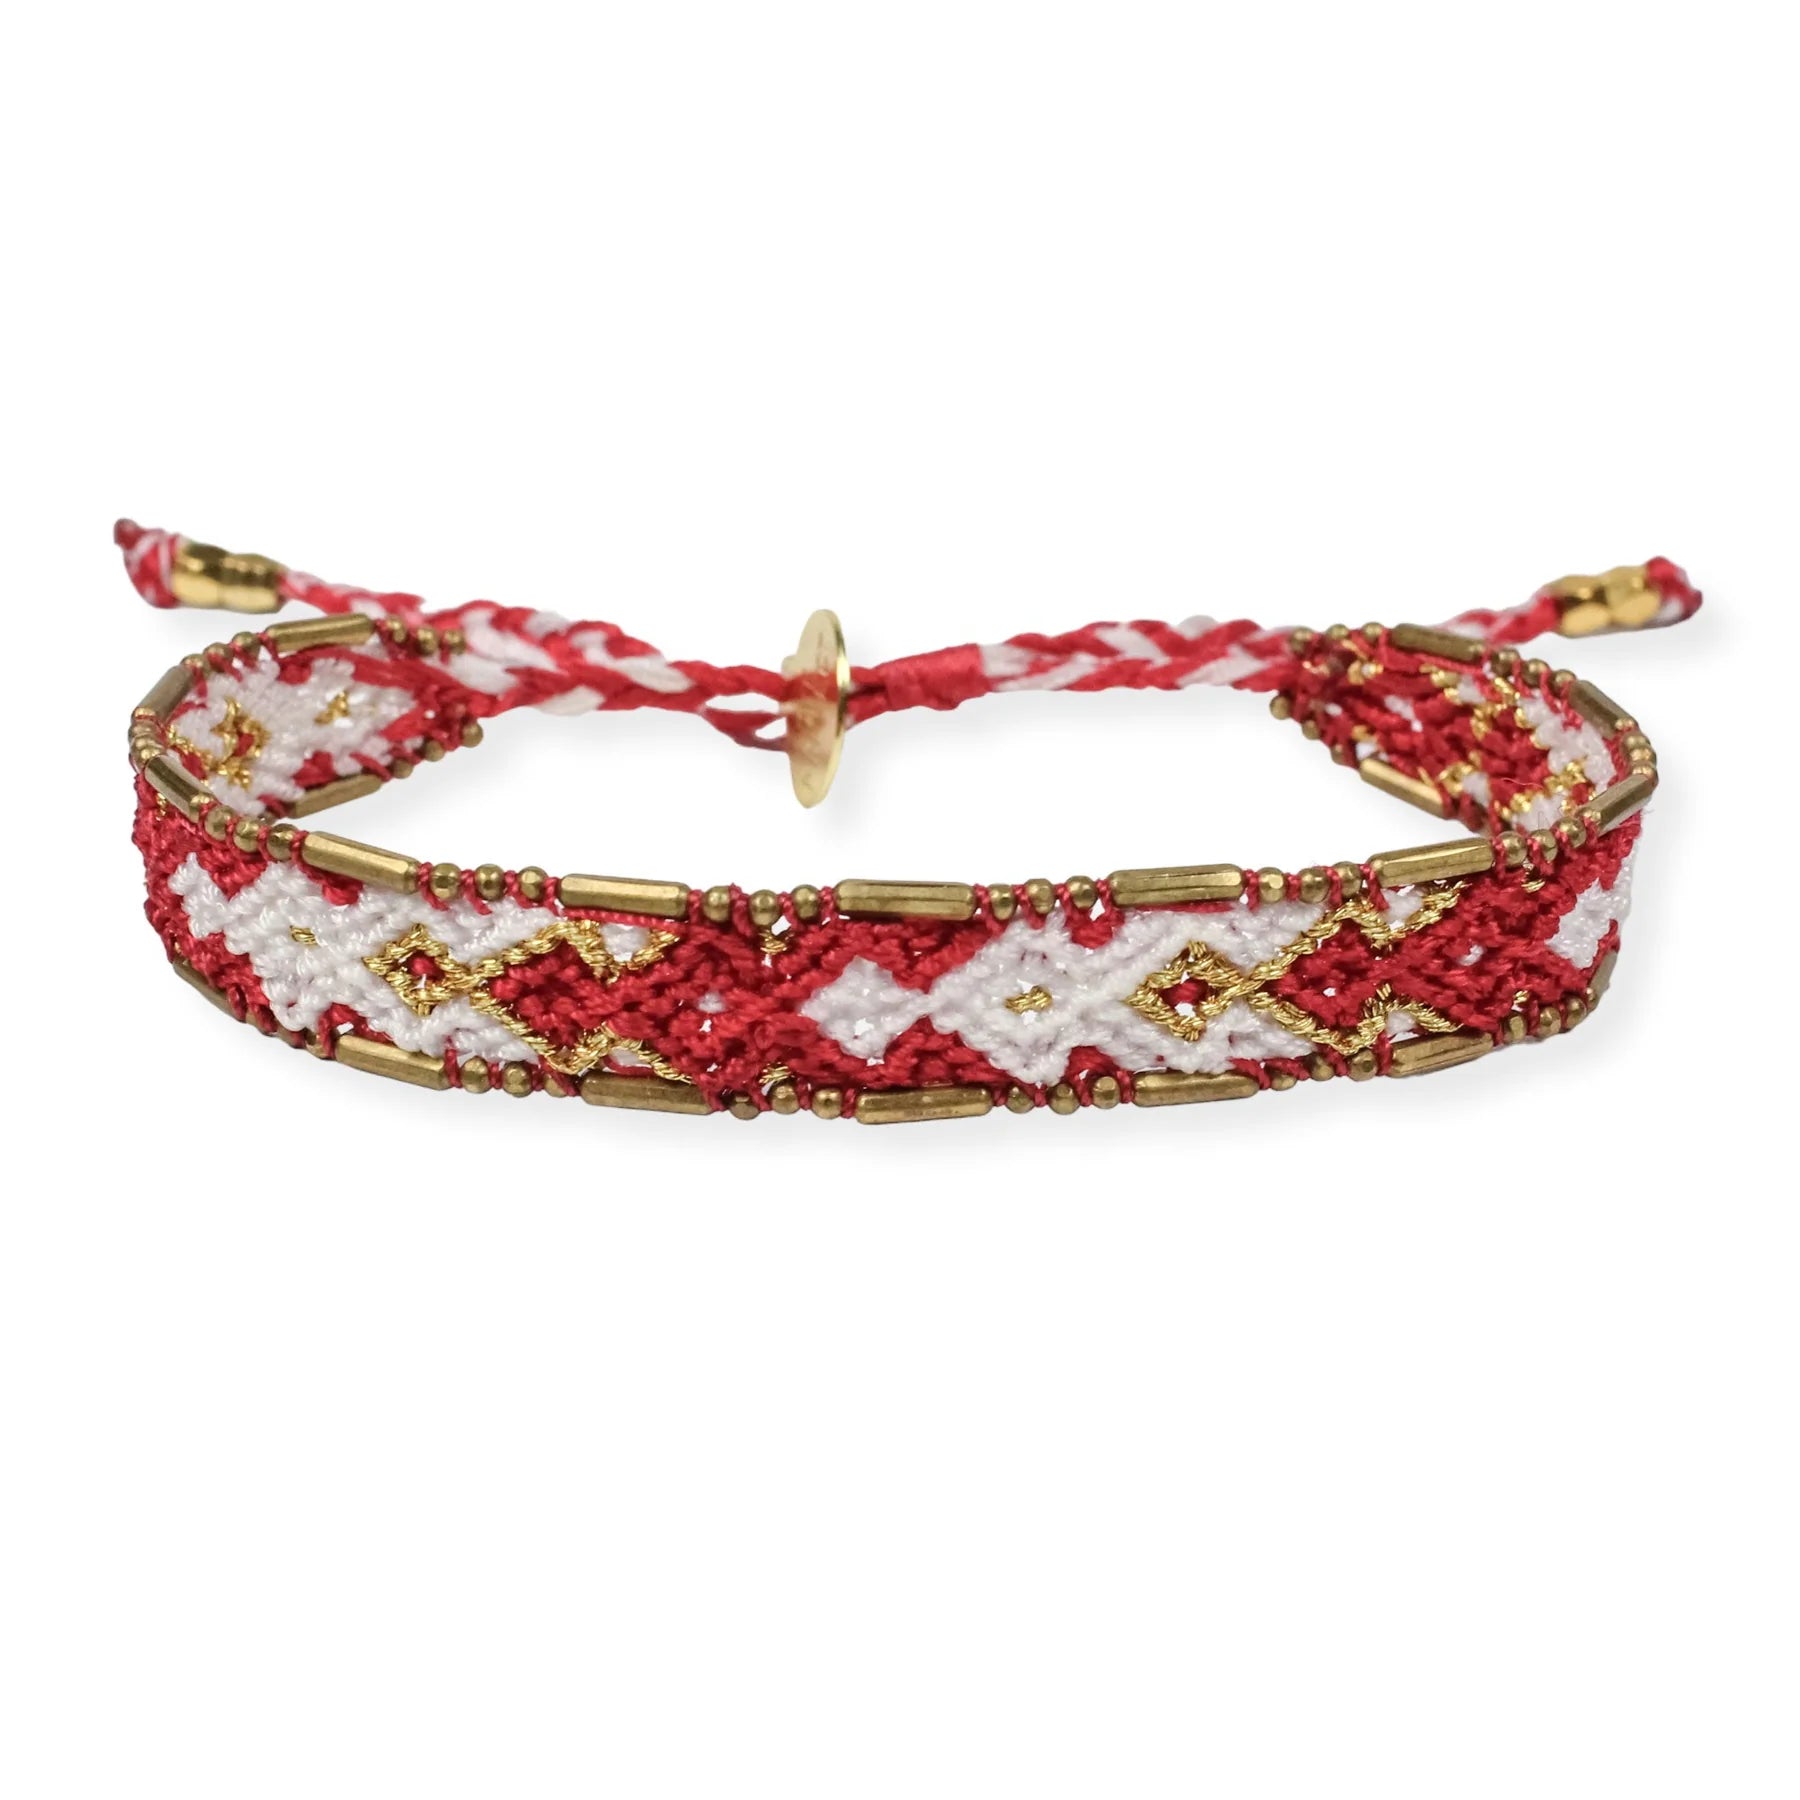 Bali Friendship Bracelet - Red and White